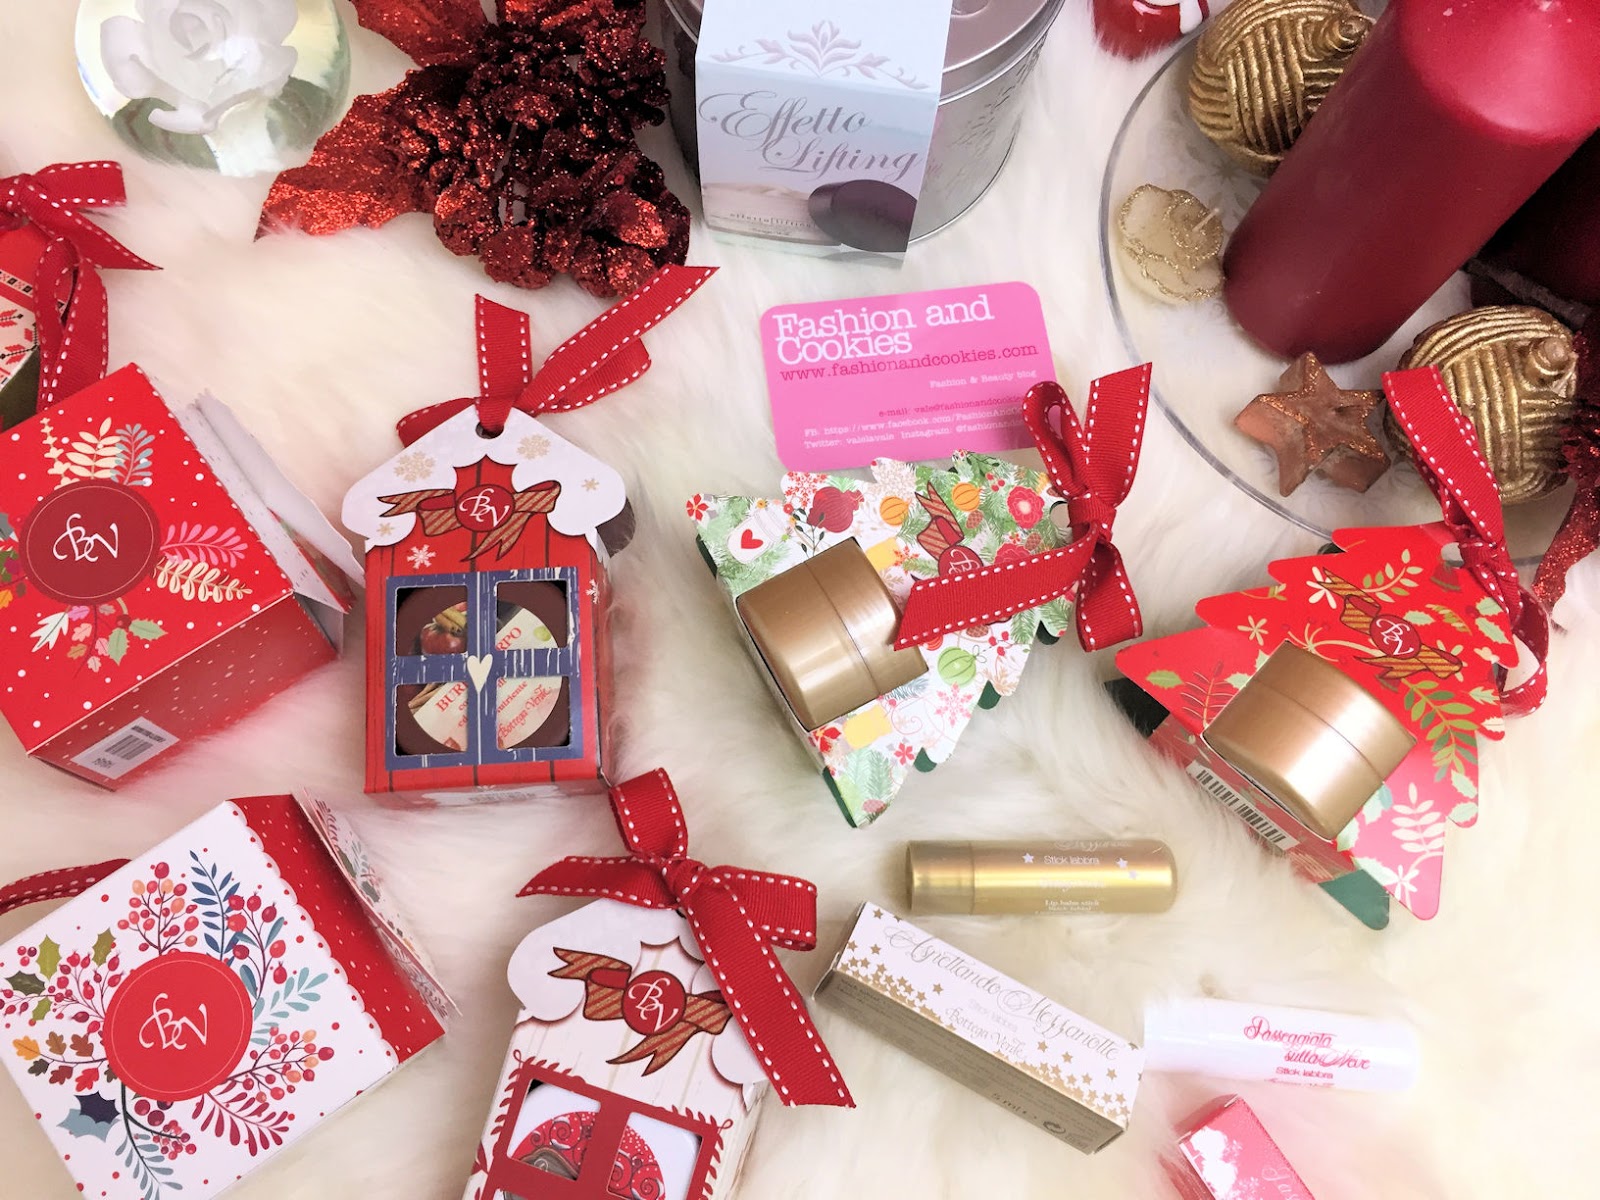 Aspettando Natale: idee regalo Bottega Verde su Fashion and Cookies beauty blog, beauty blogger